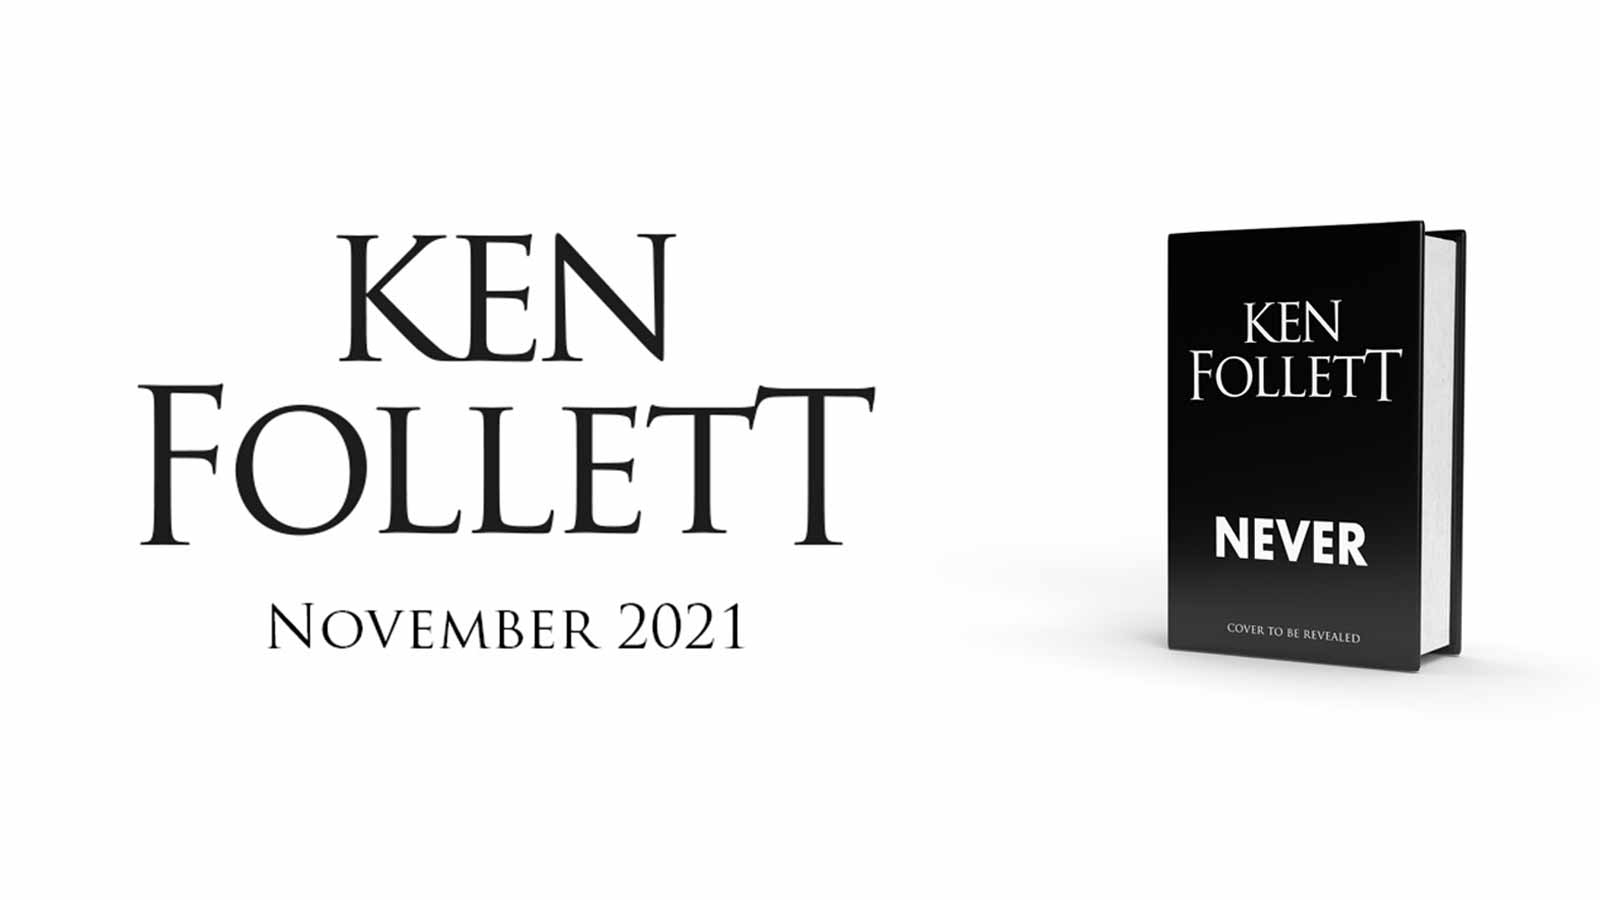 Test reading Ken Follett November 2021 and a black book cover reading Ken Follett, Never, cover to be revealed. 